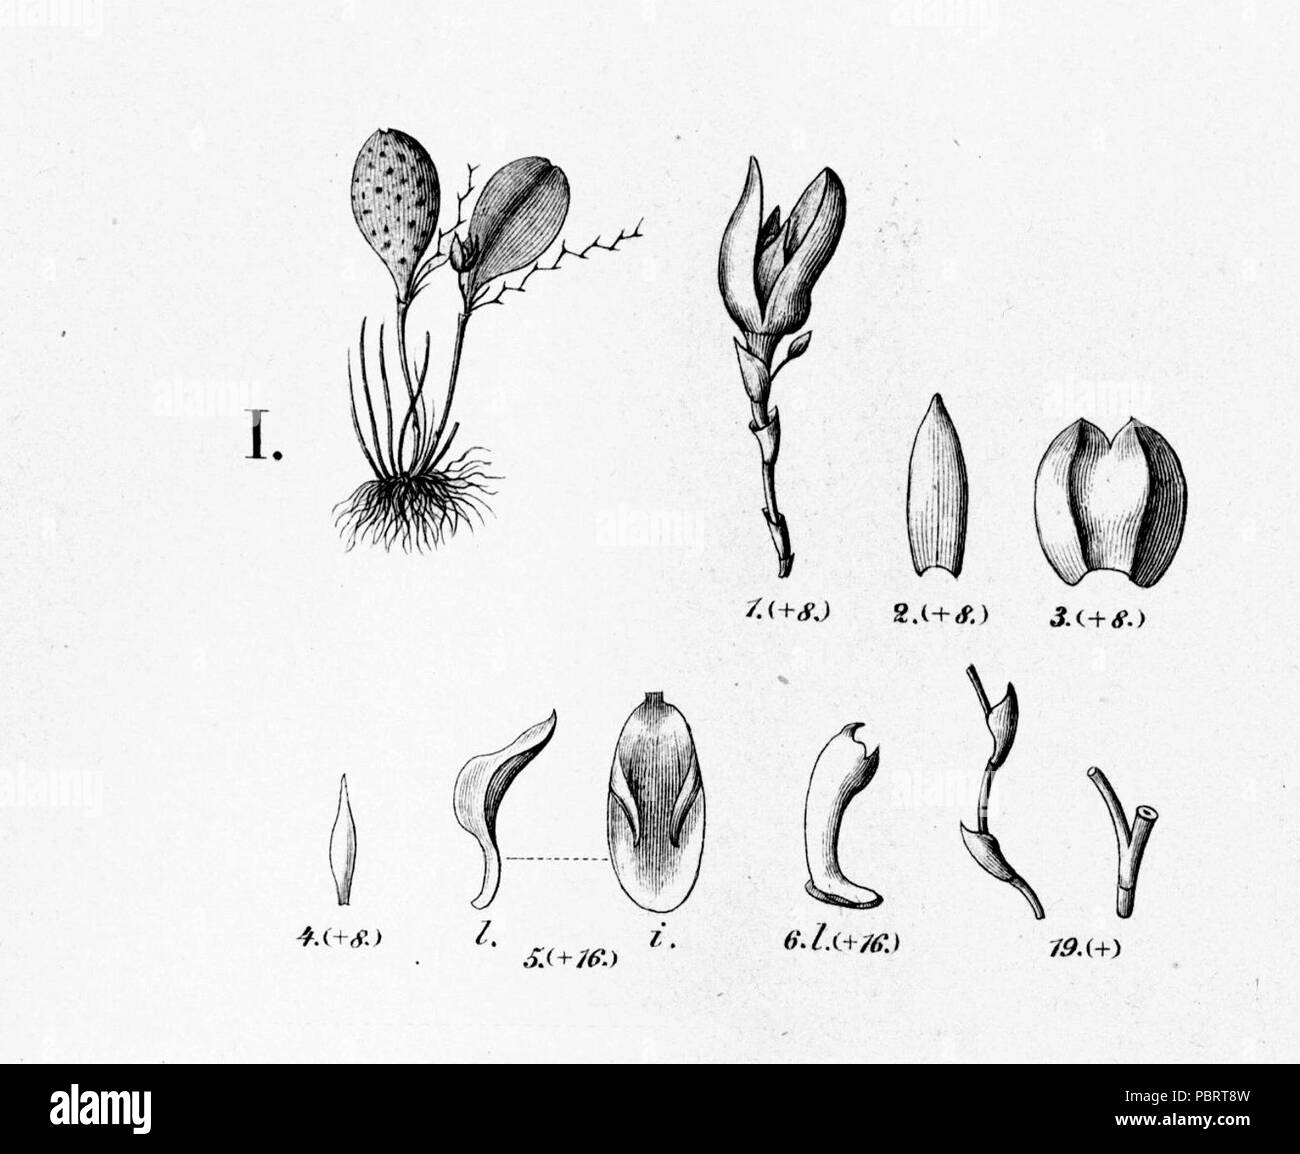 Acianthera serpentula (as Pleurothallis punctata) - cutout from Fl.Br.3-4-92. Stock Photo